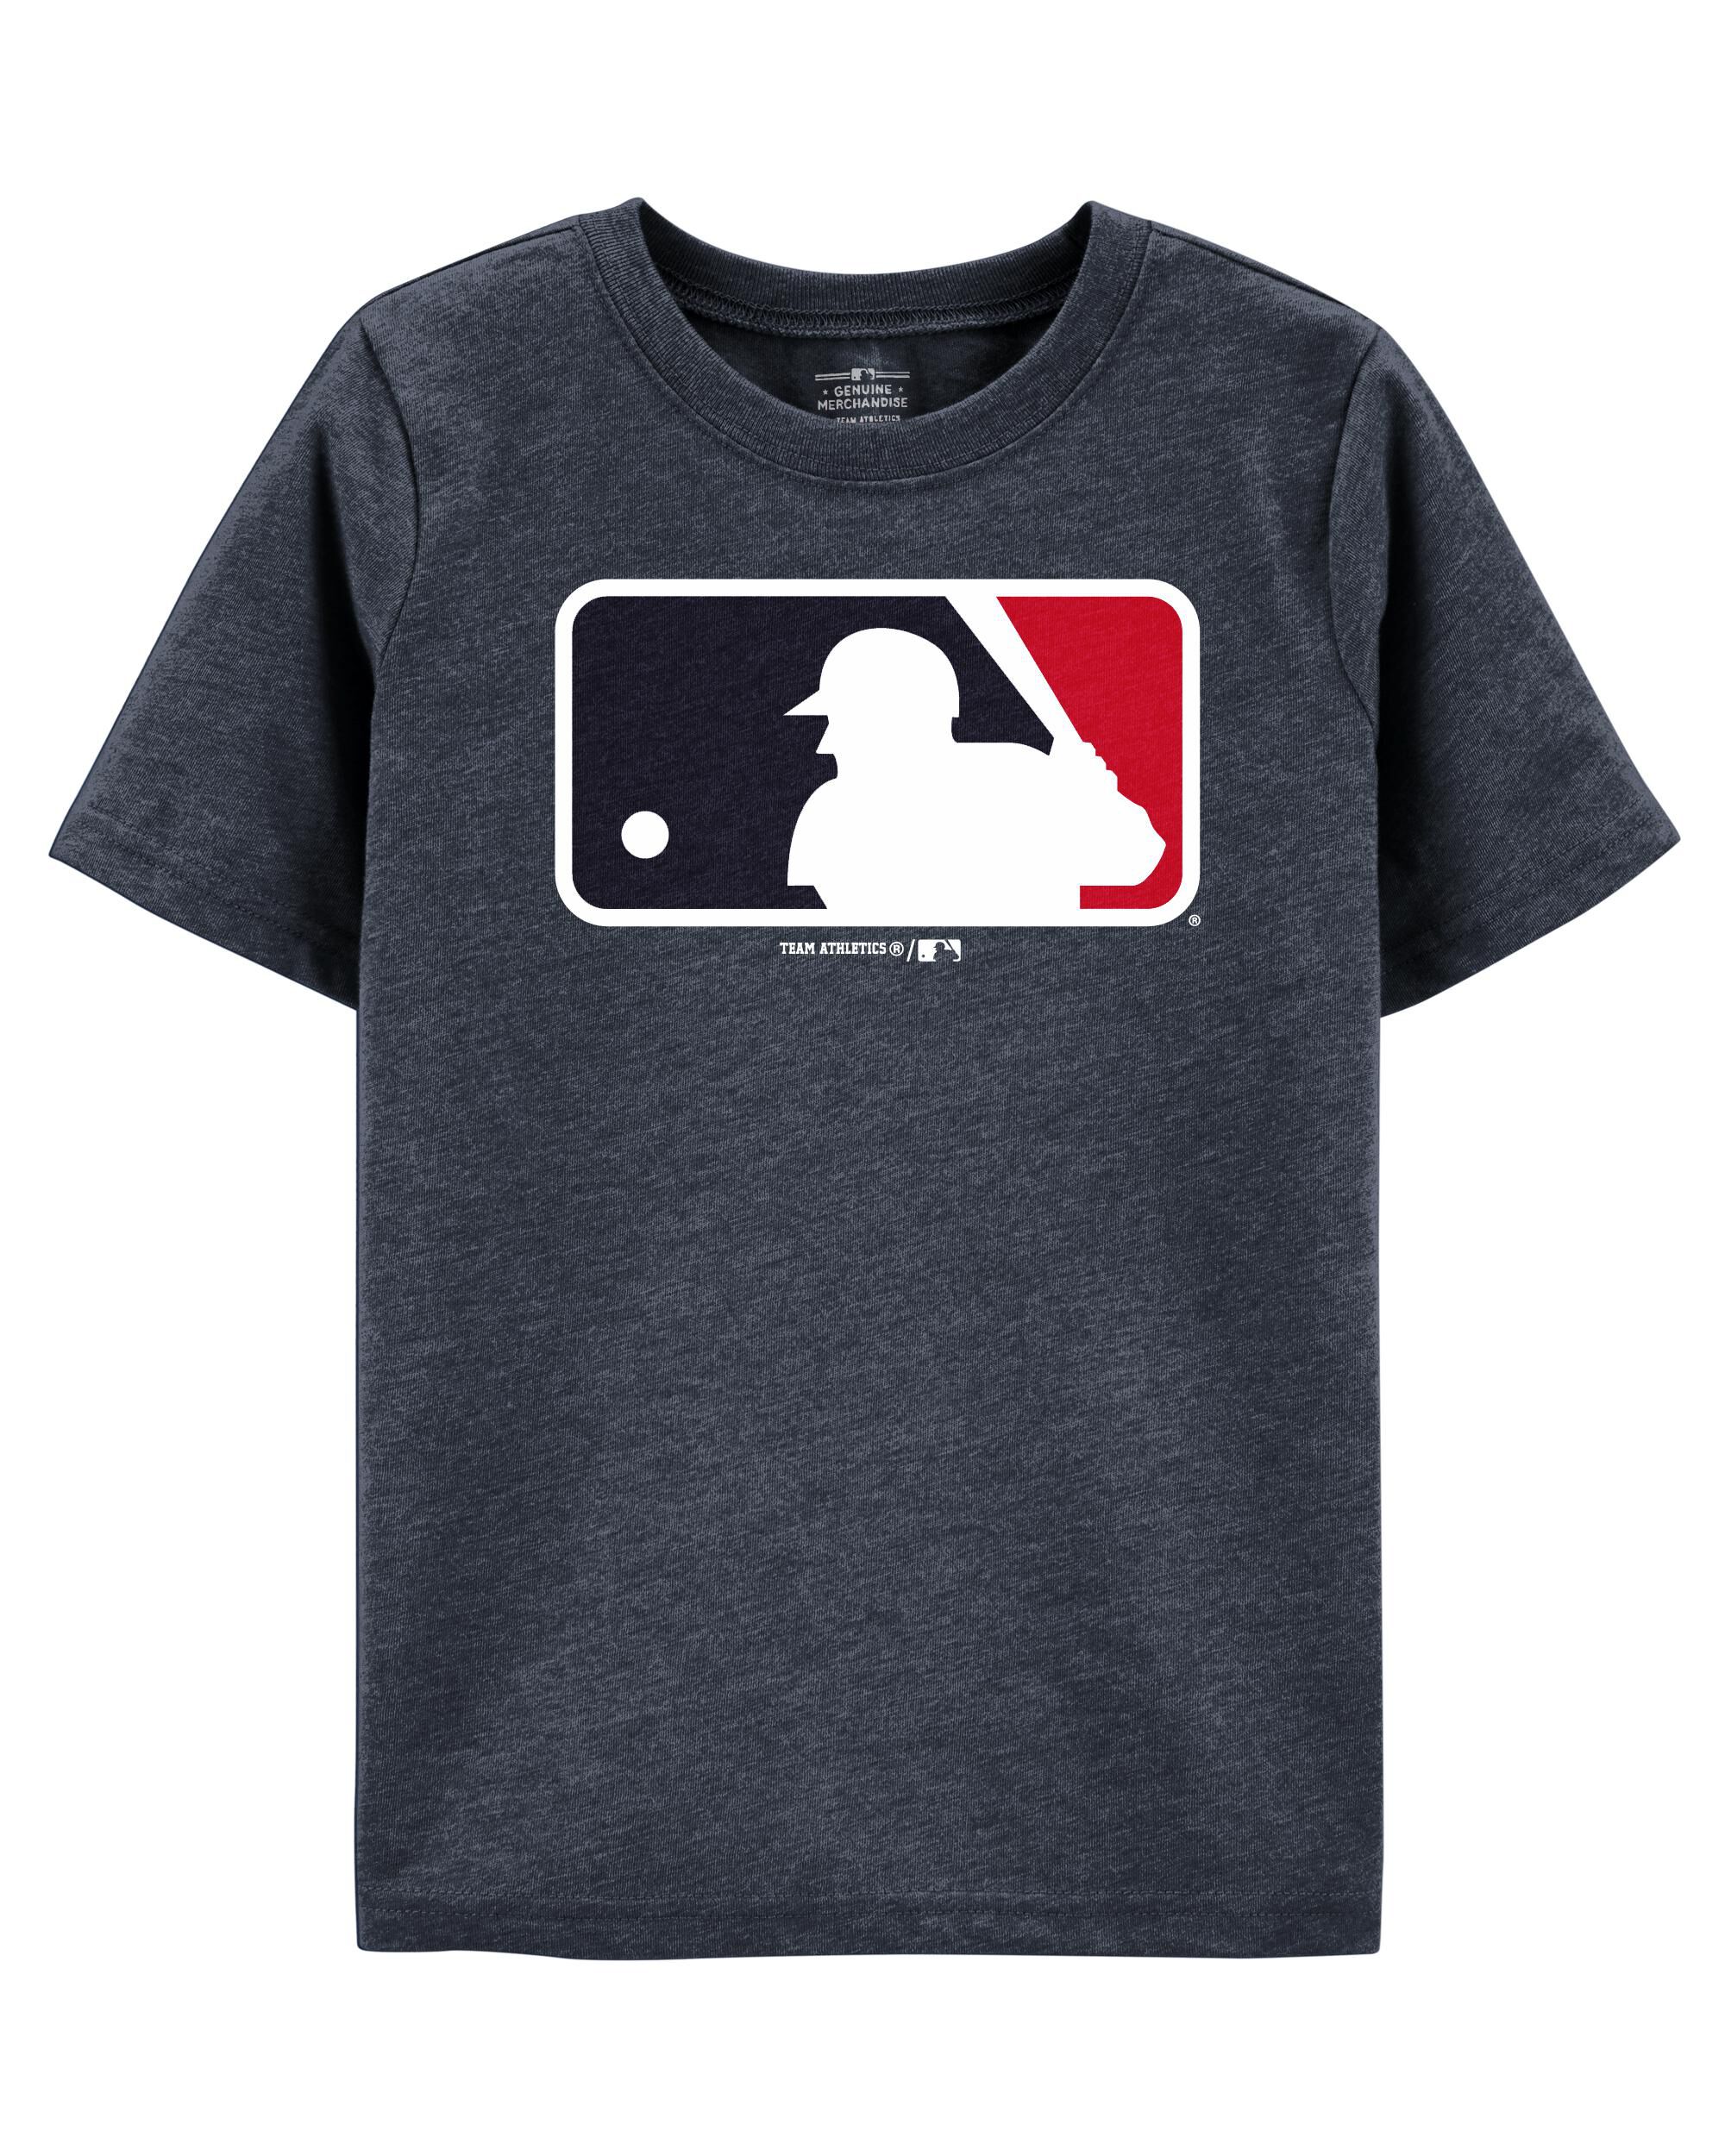 NY Yankees MLB Genuine Merchandise Big Logo small size crewneck Bayi   Anak Baju Anak Lakilaki 8 hingga 12 tahun di Carousell